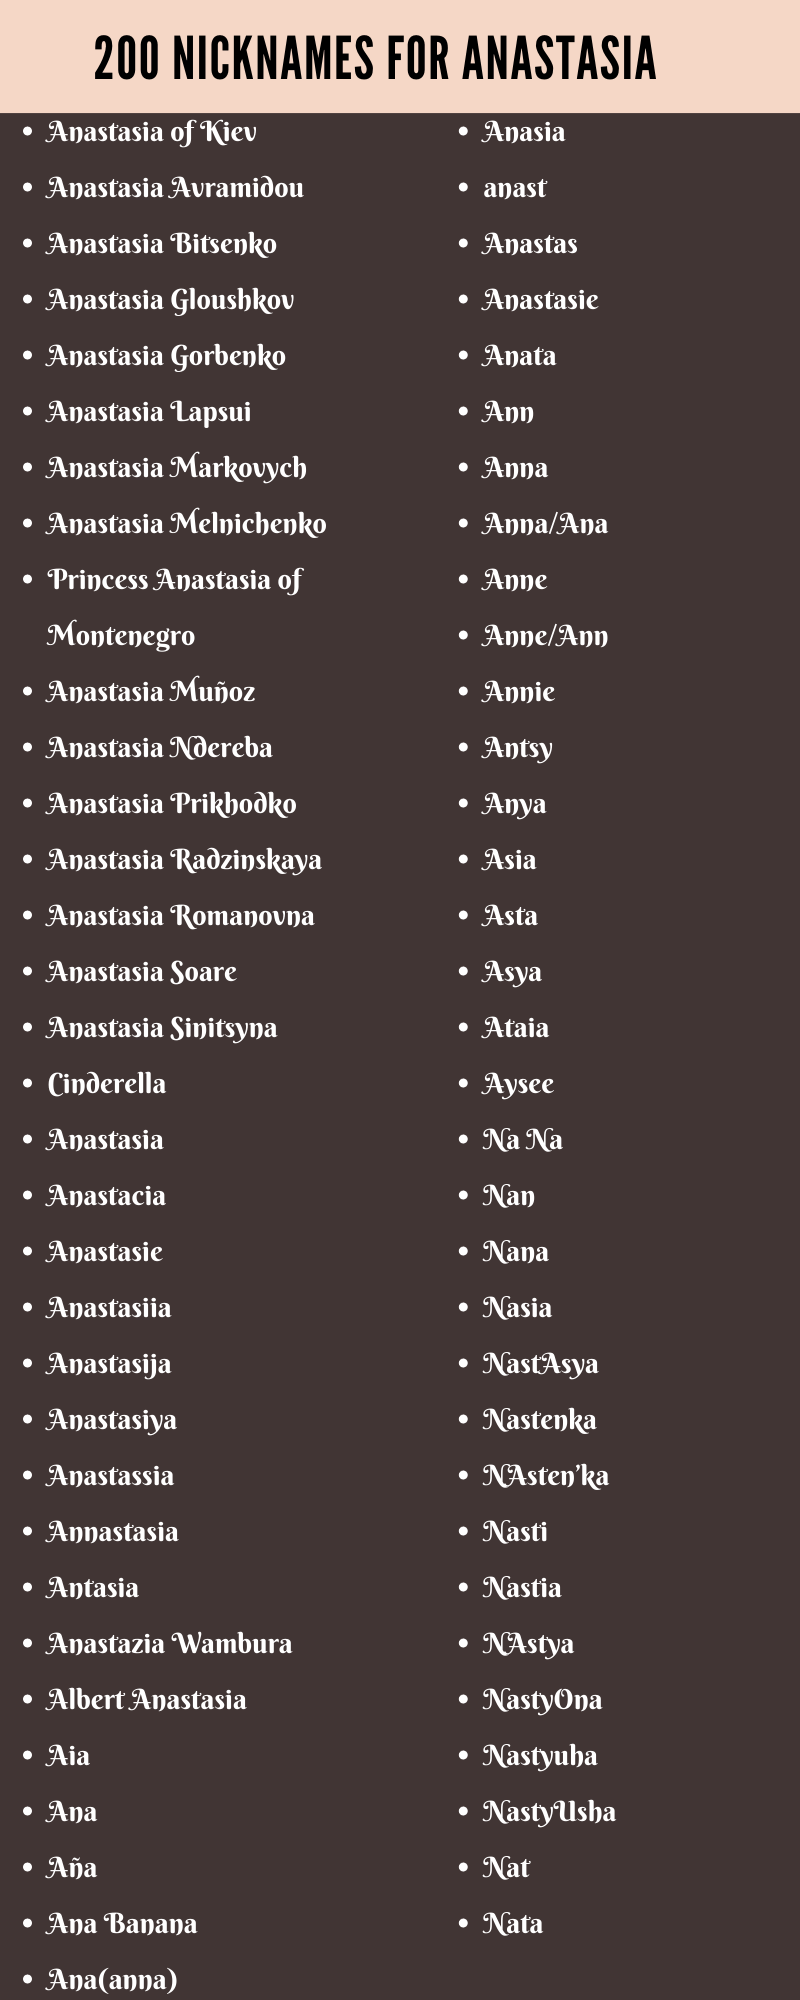 nicknames for anastasia